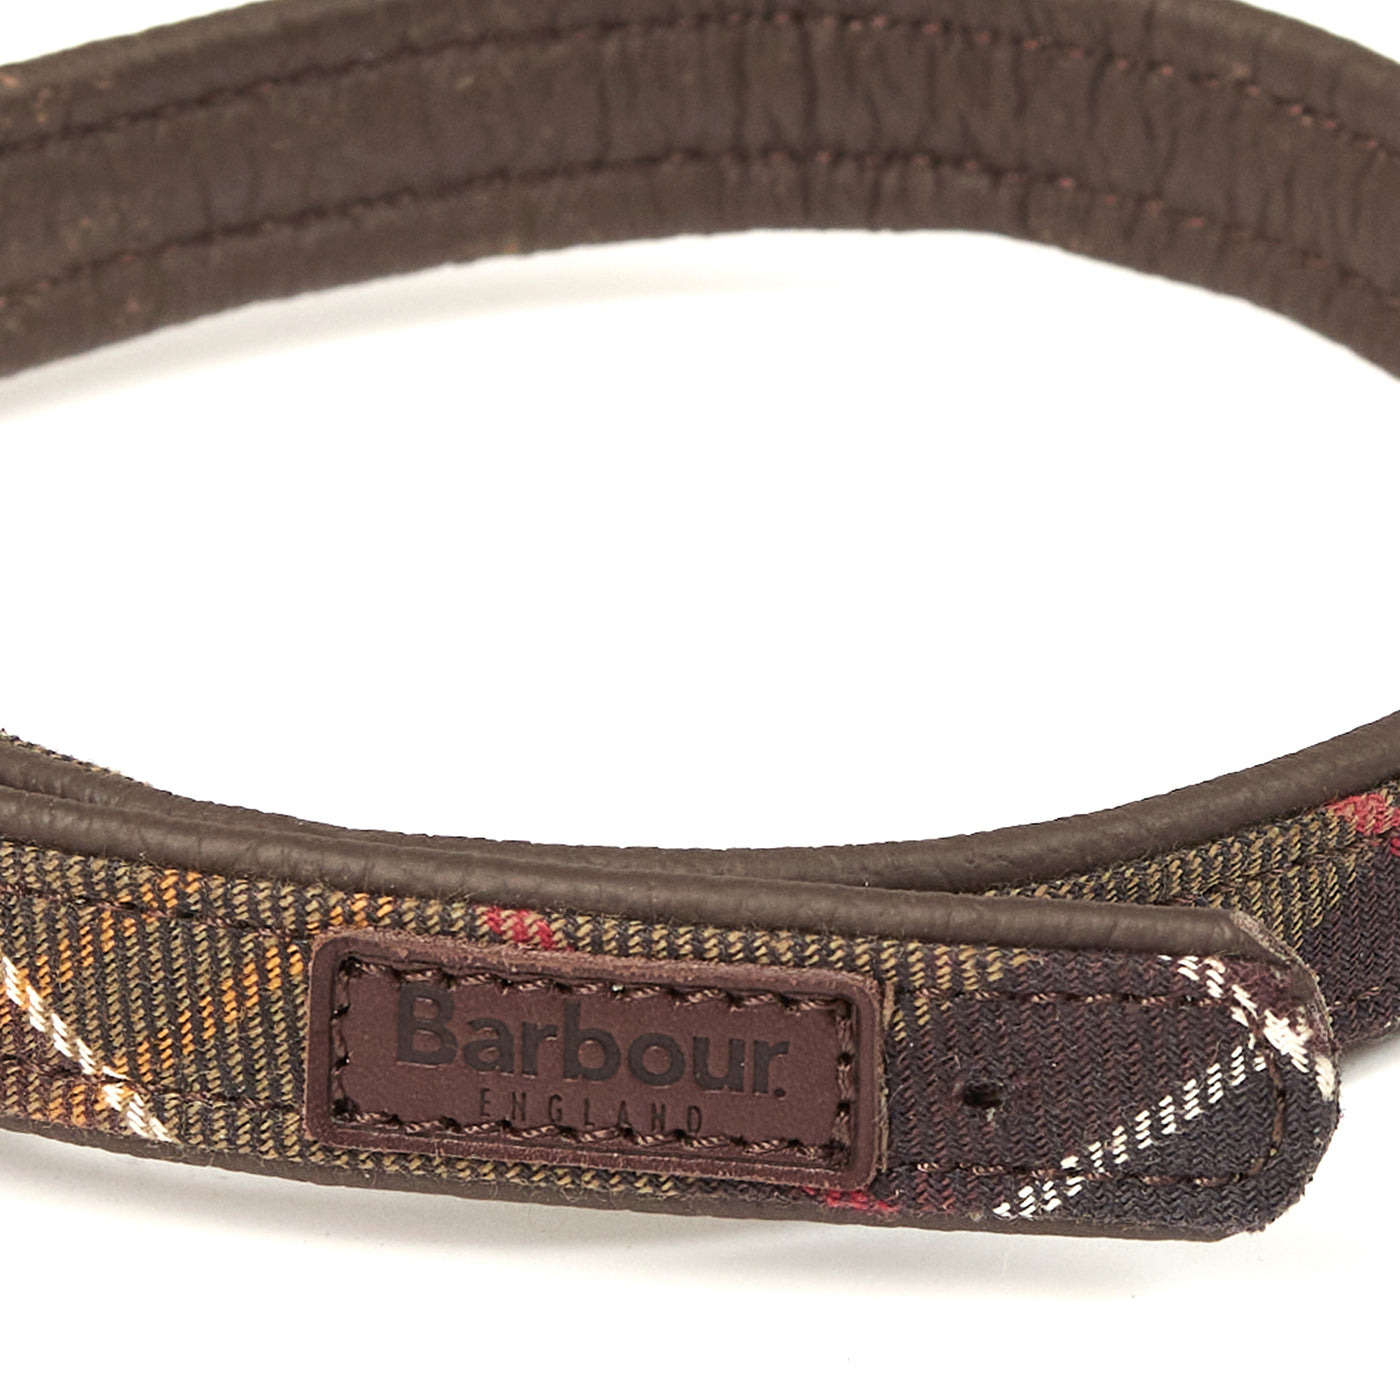 Barbour Tartan Dog Collar Detail